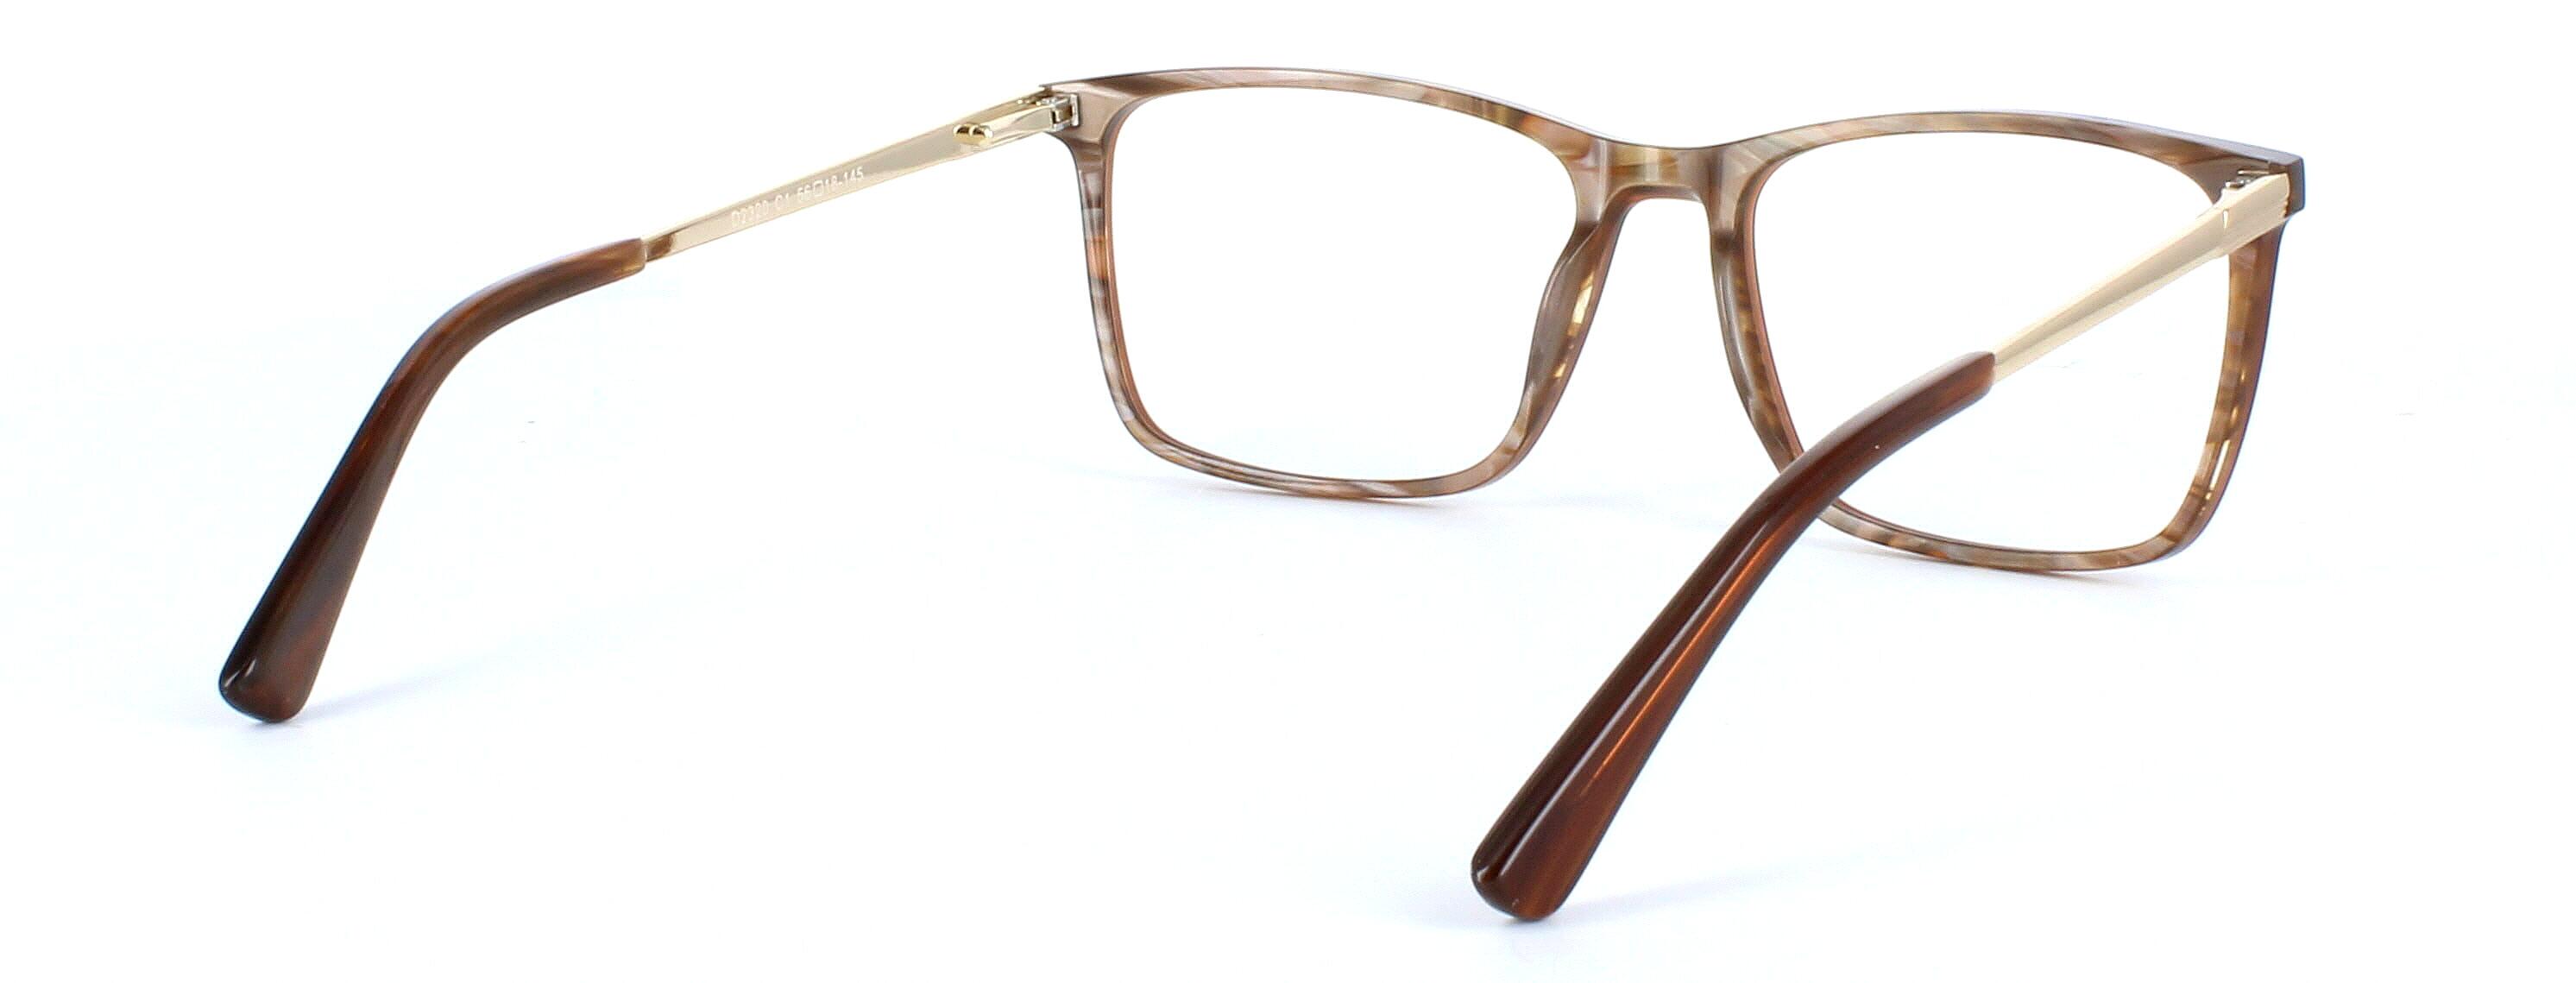 Farleigh - Men's full rim acetate glasses frame in shiny havannah - image view 4